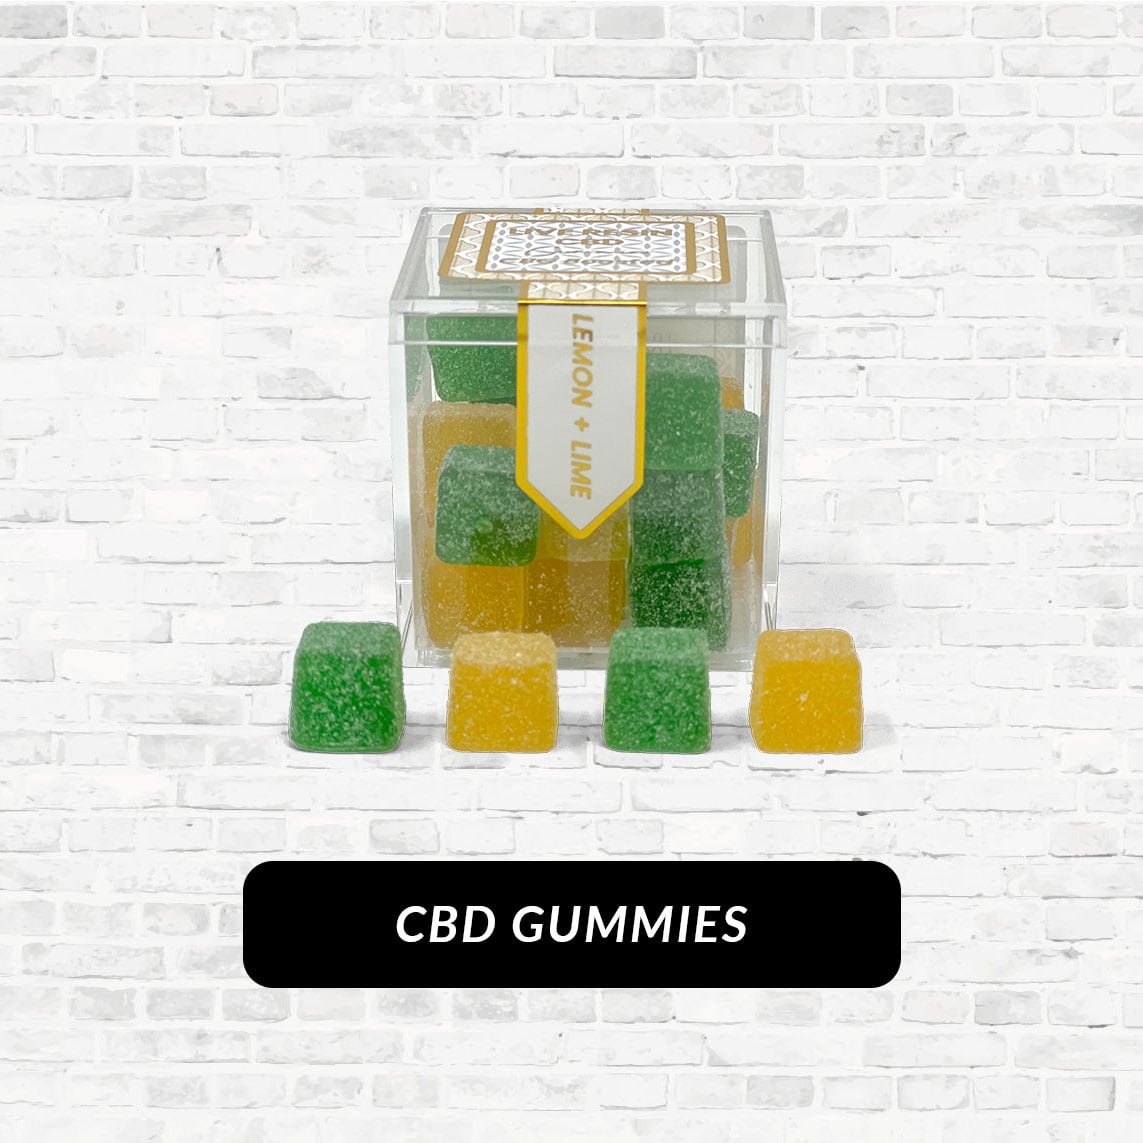 All CBD Gummies